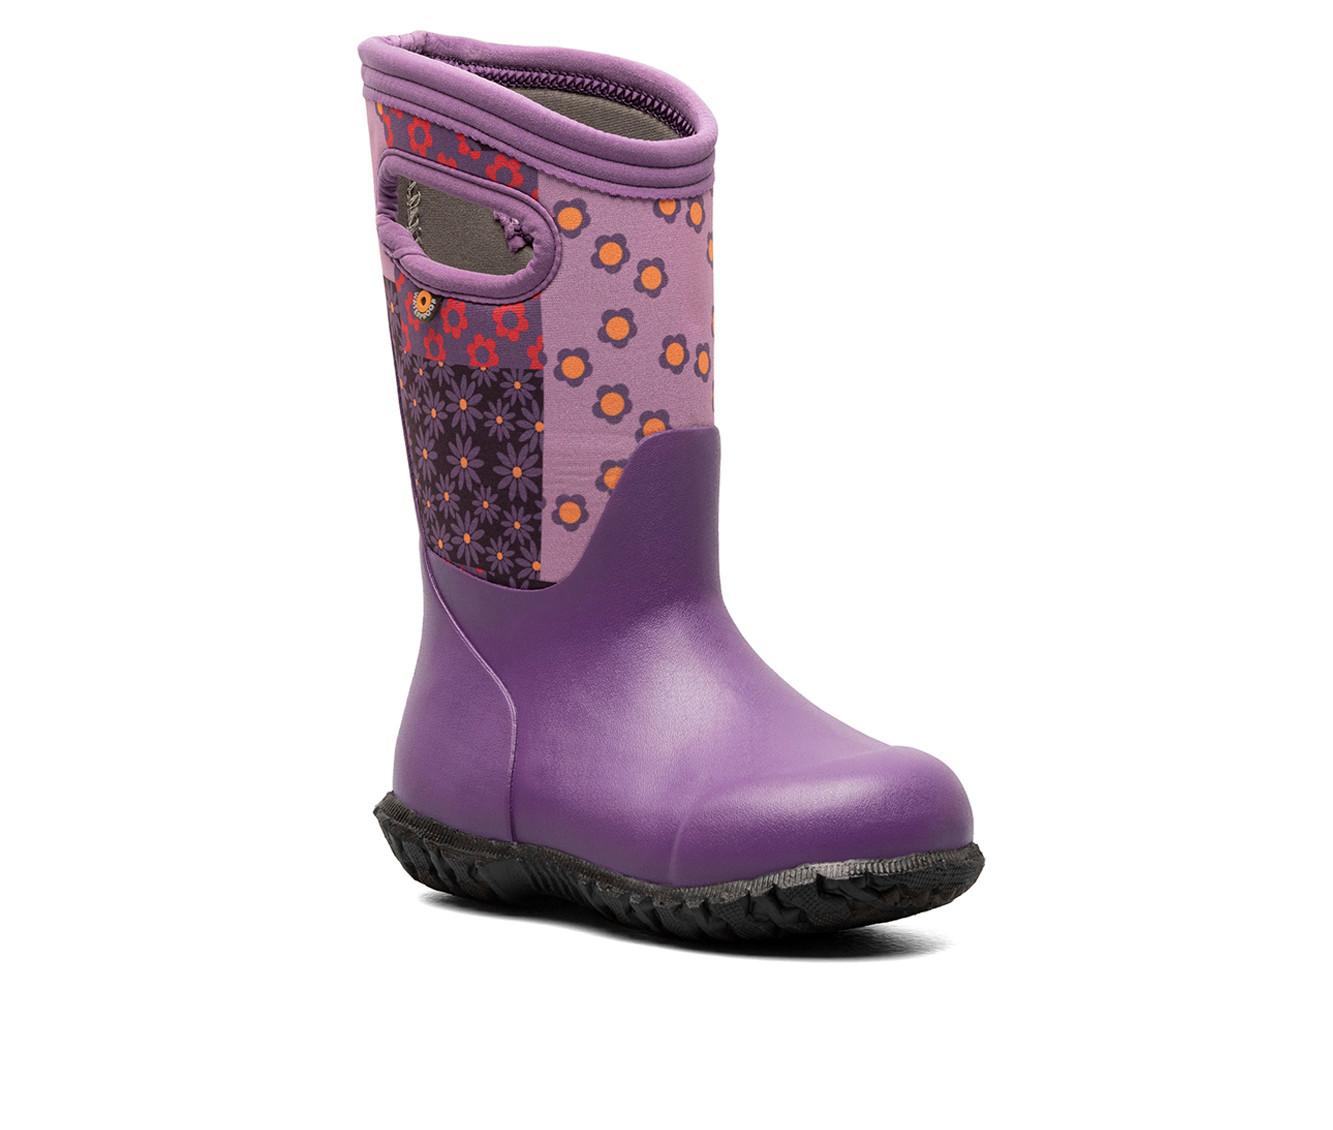 Girls' Bogs Footwear Toddler & Little Kid York Patchwork Floral Rain Boots